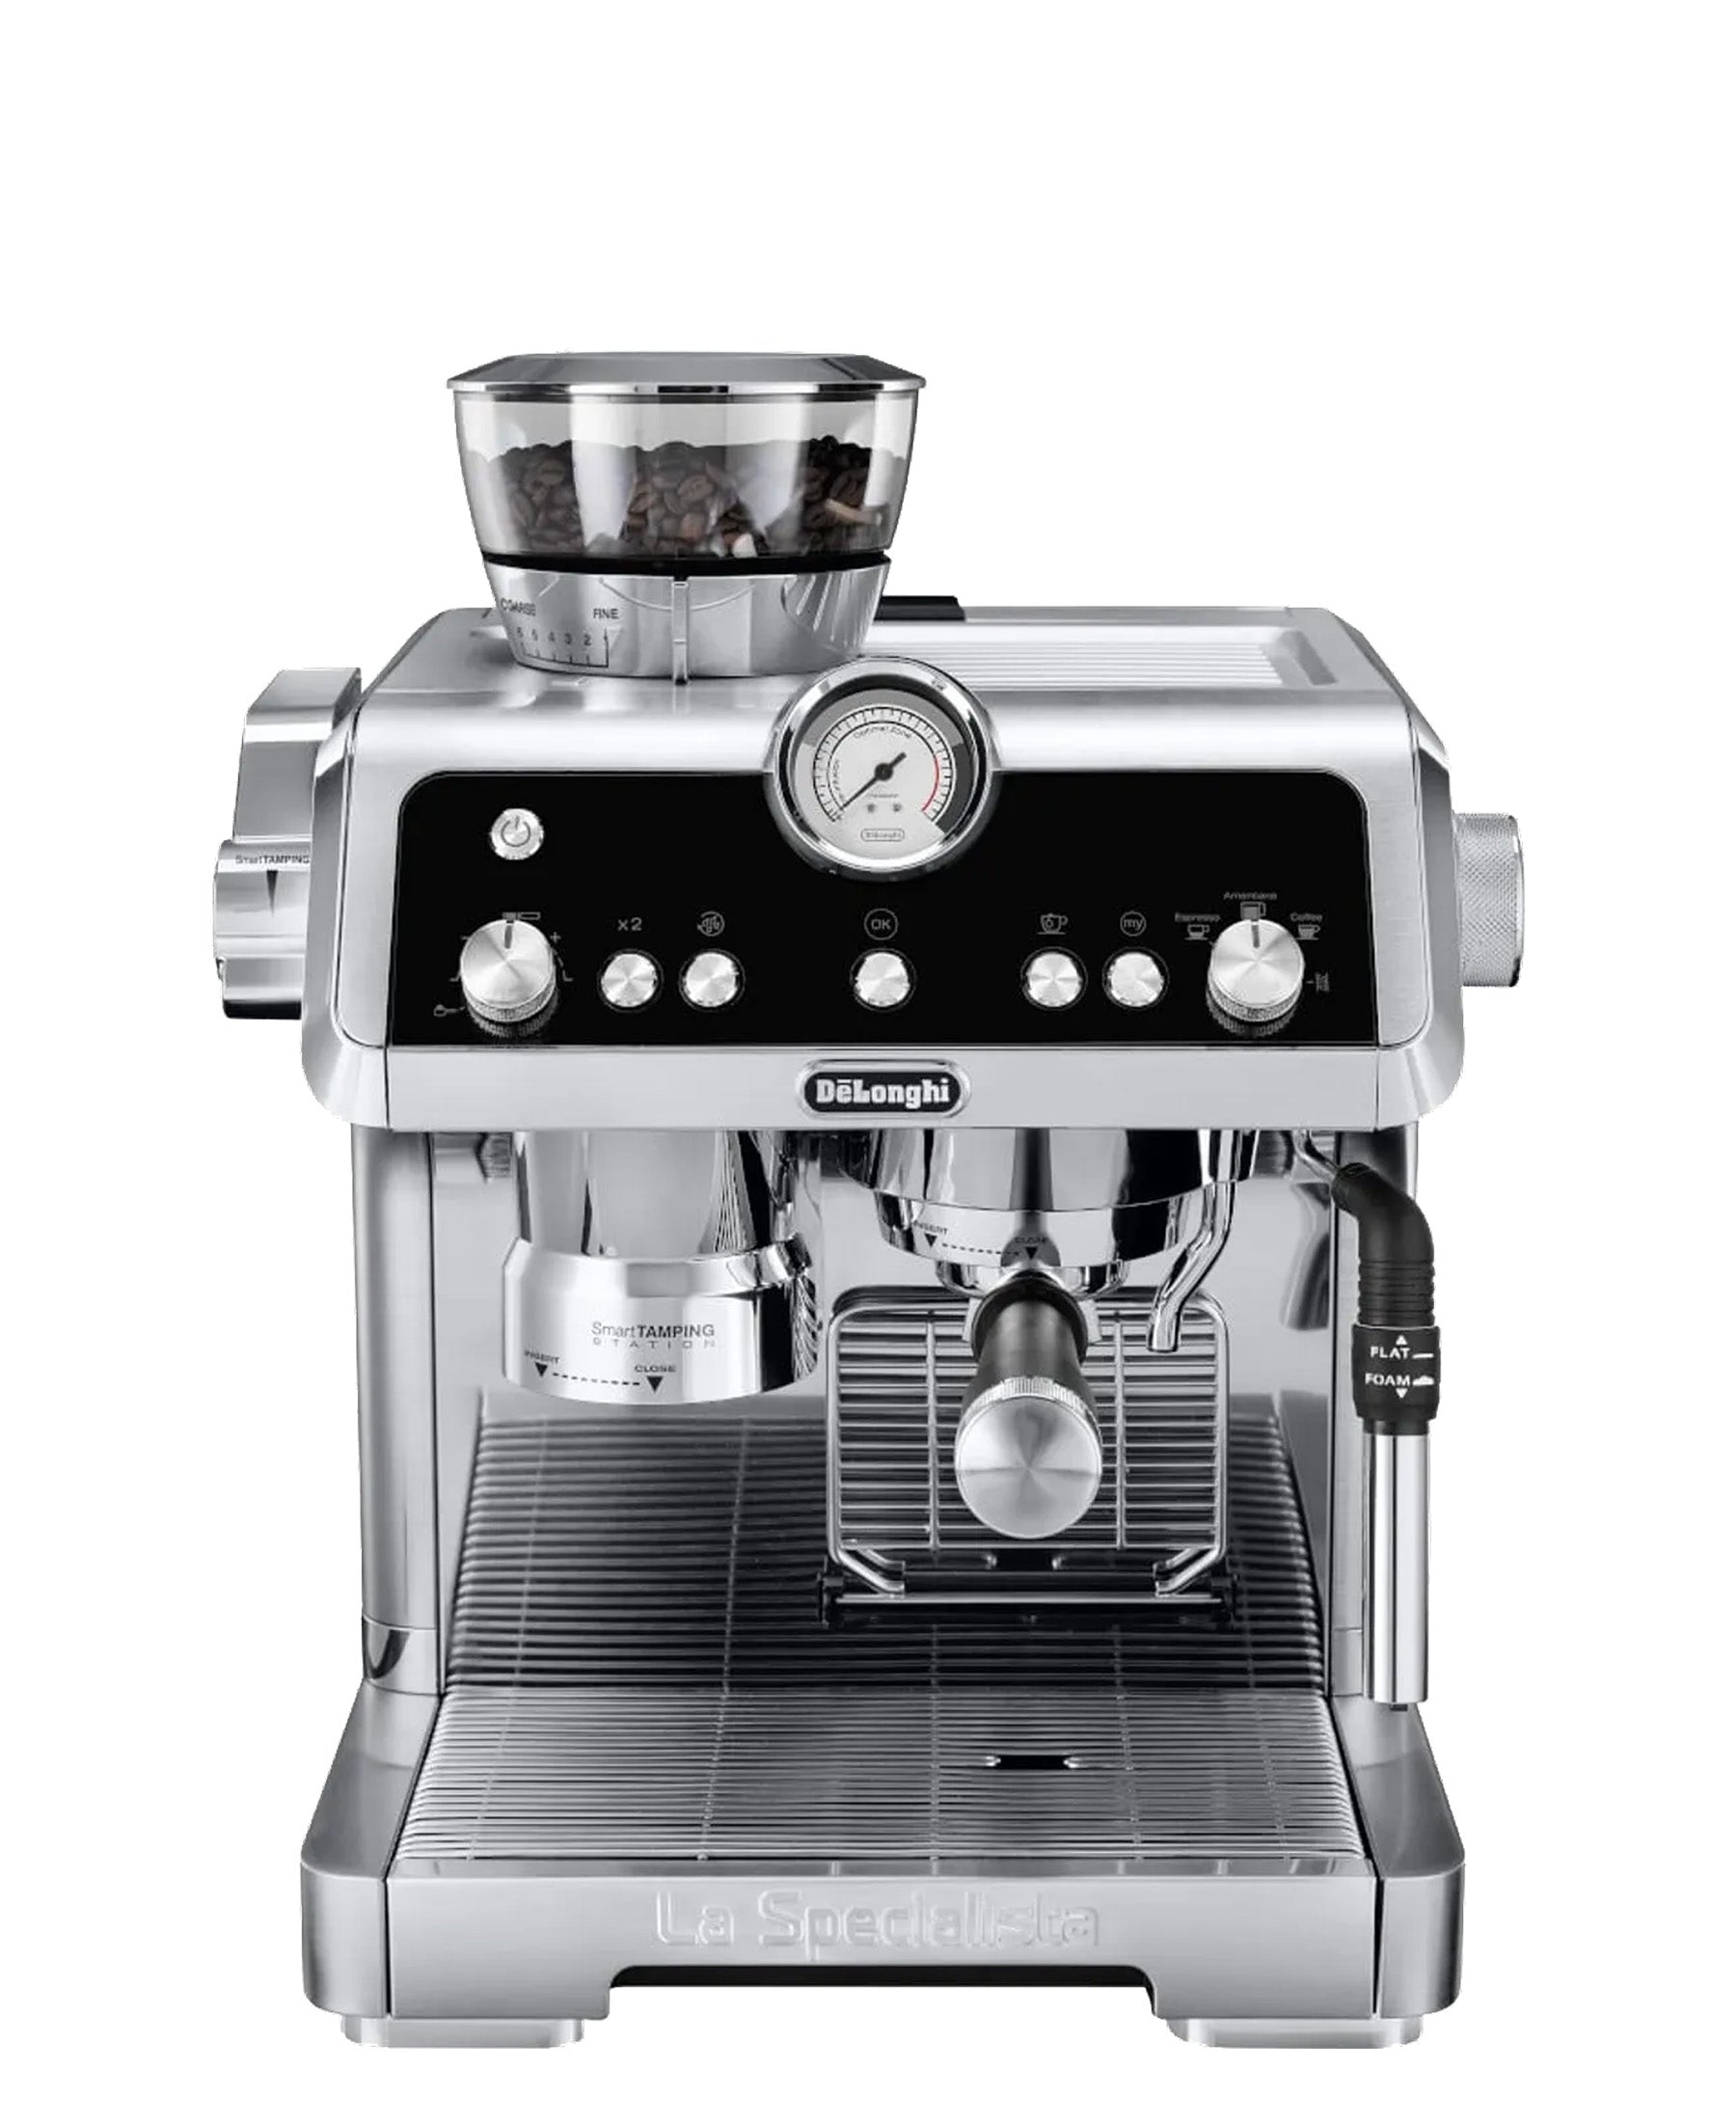 Delonghi La Specialista Manual Pump Espresso Machine - Silver